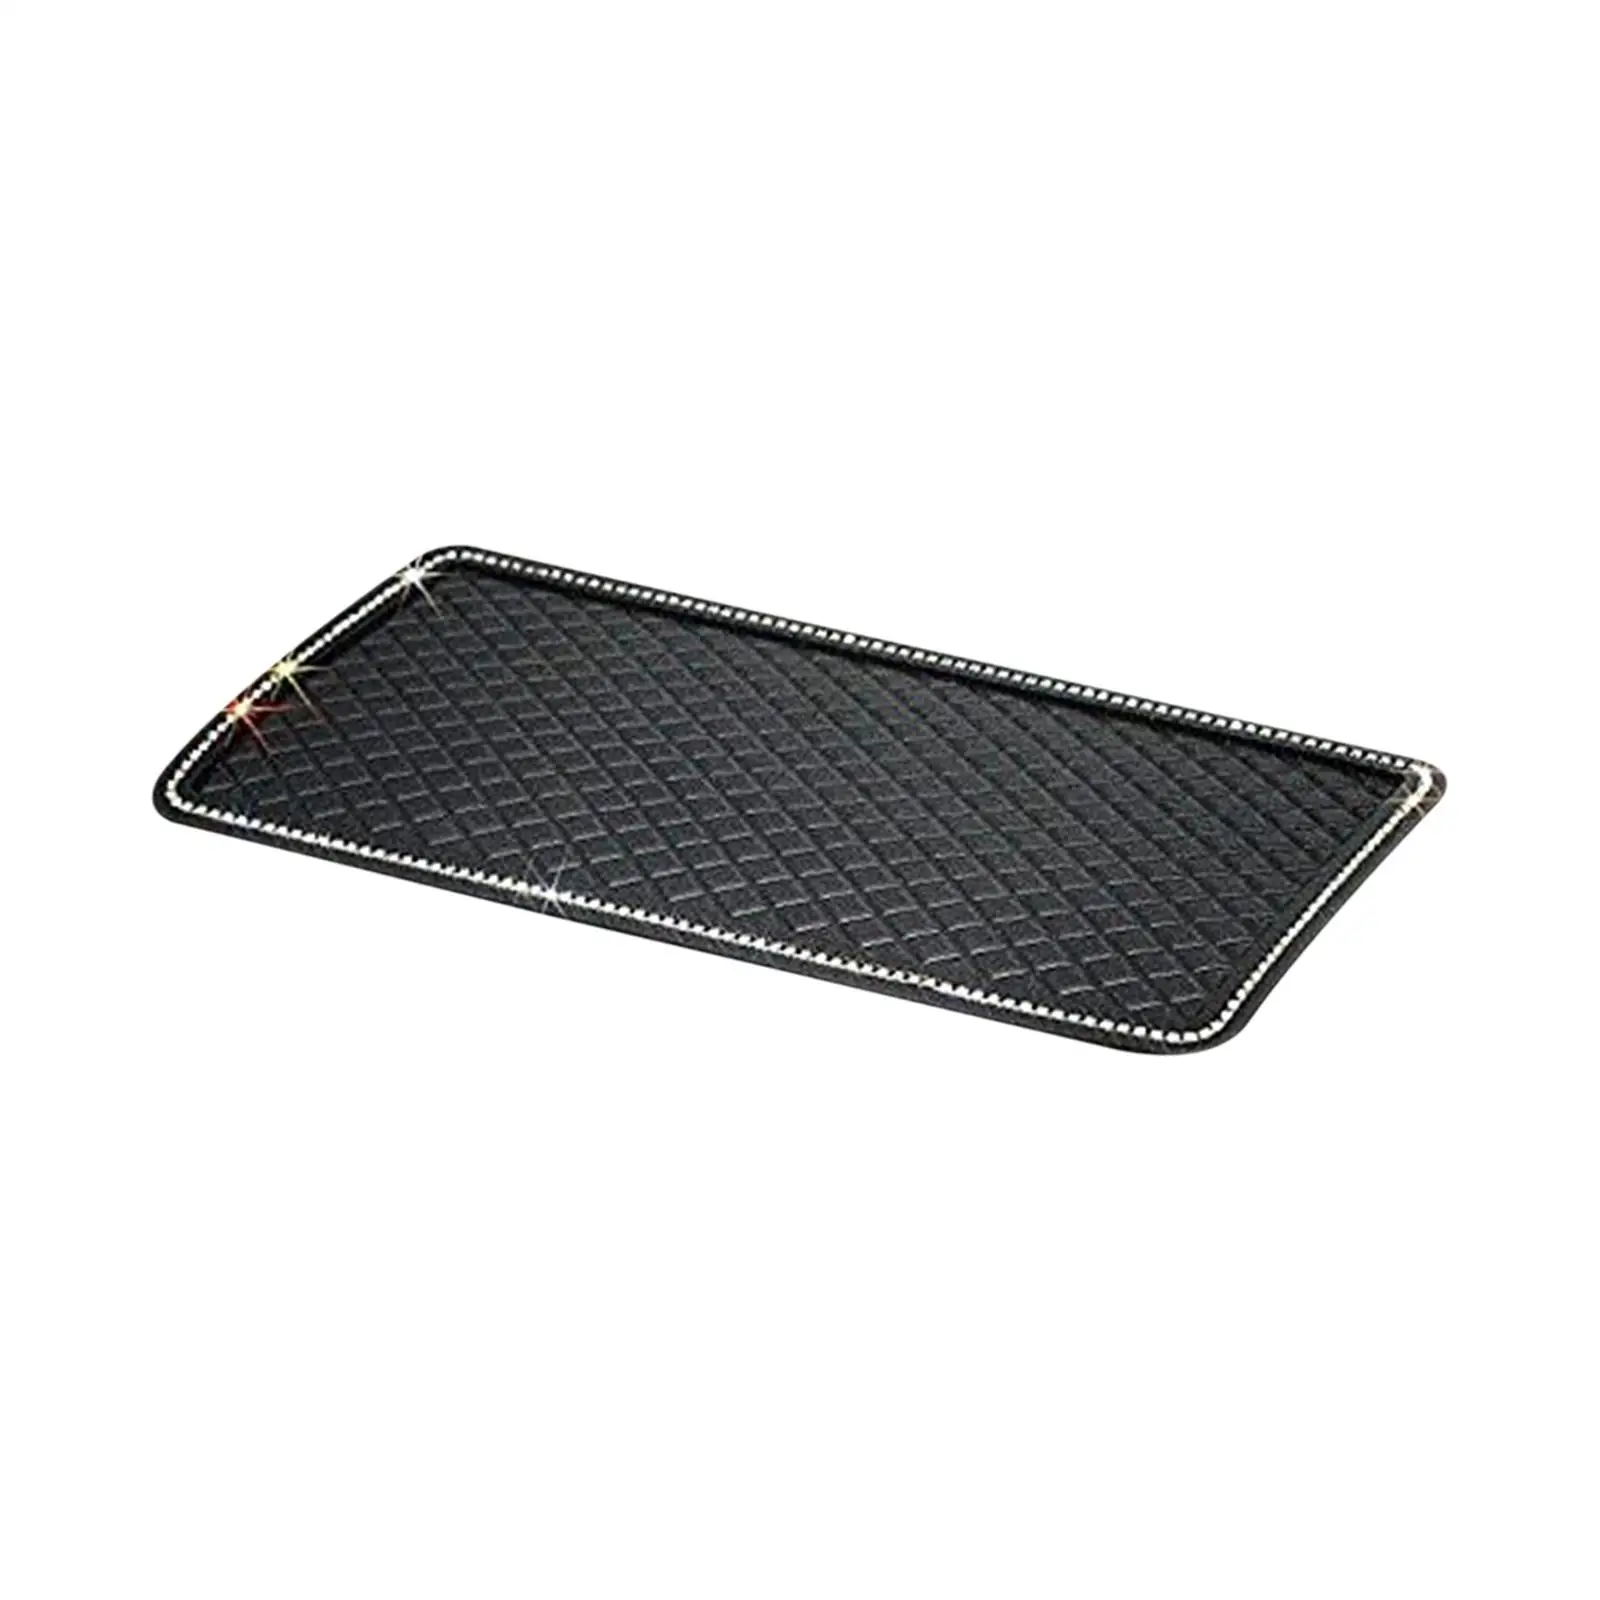 Car Anti Slip Sticky Dashboard Pad Interior Accessories for Keys Phones